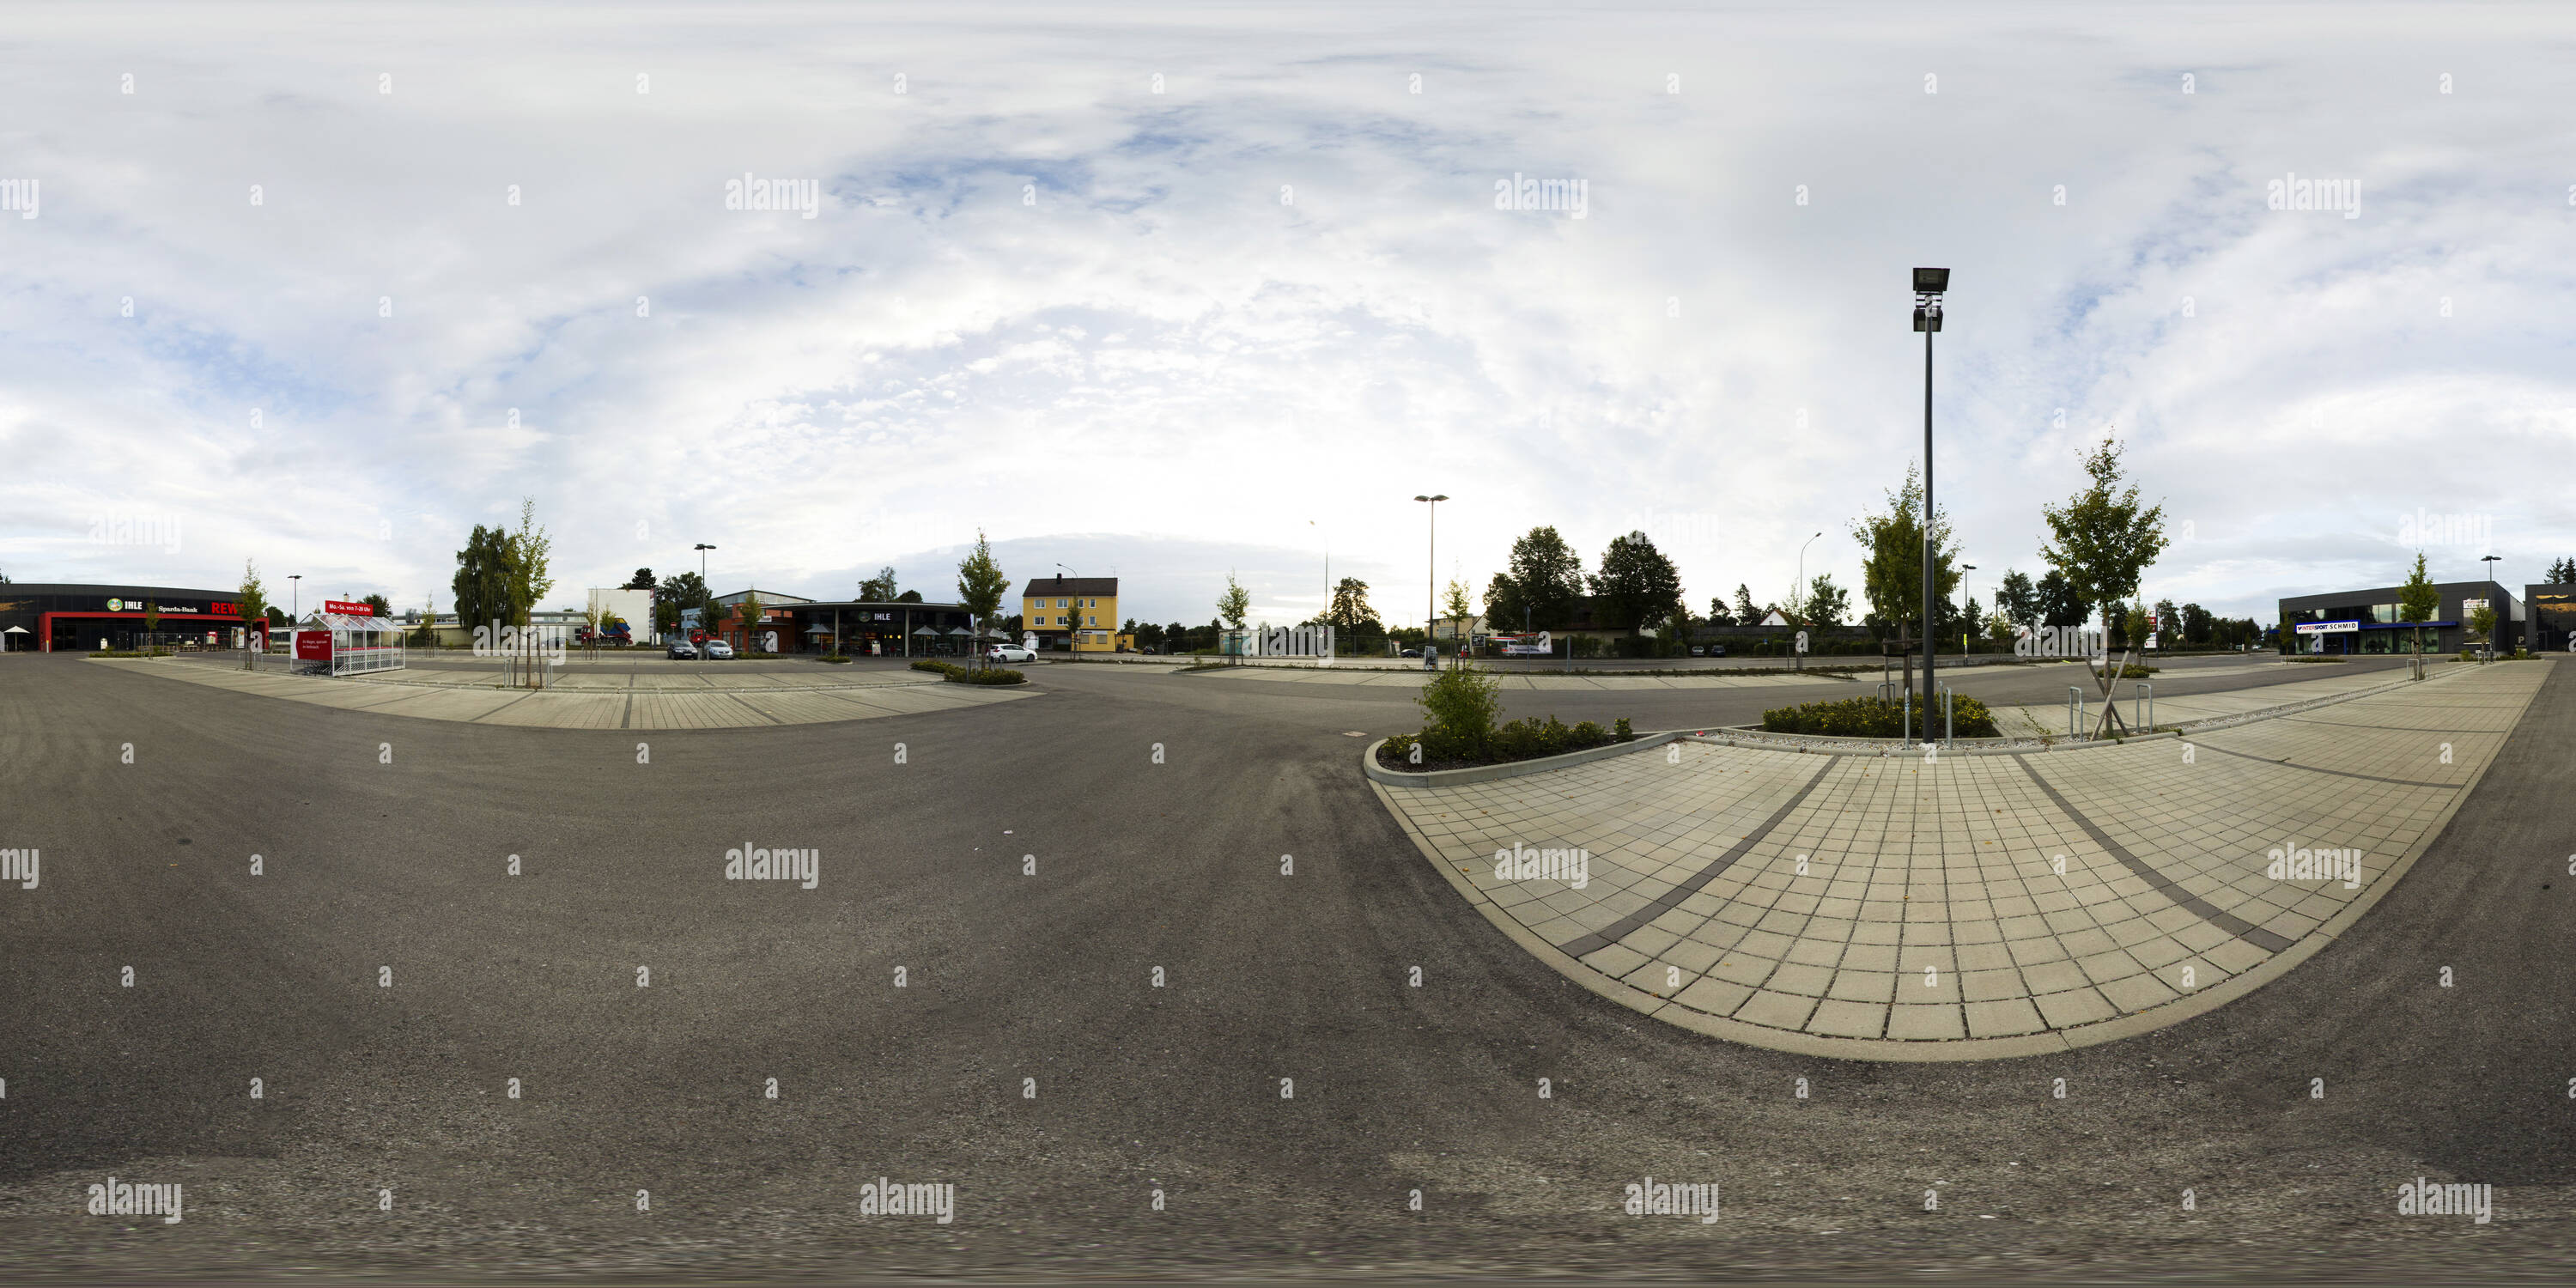 Visualizzazione panoramica a 360 gradi di Rewe, Intersport, Ihle, capelli superiore